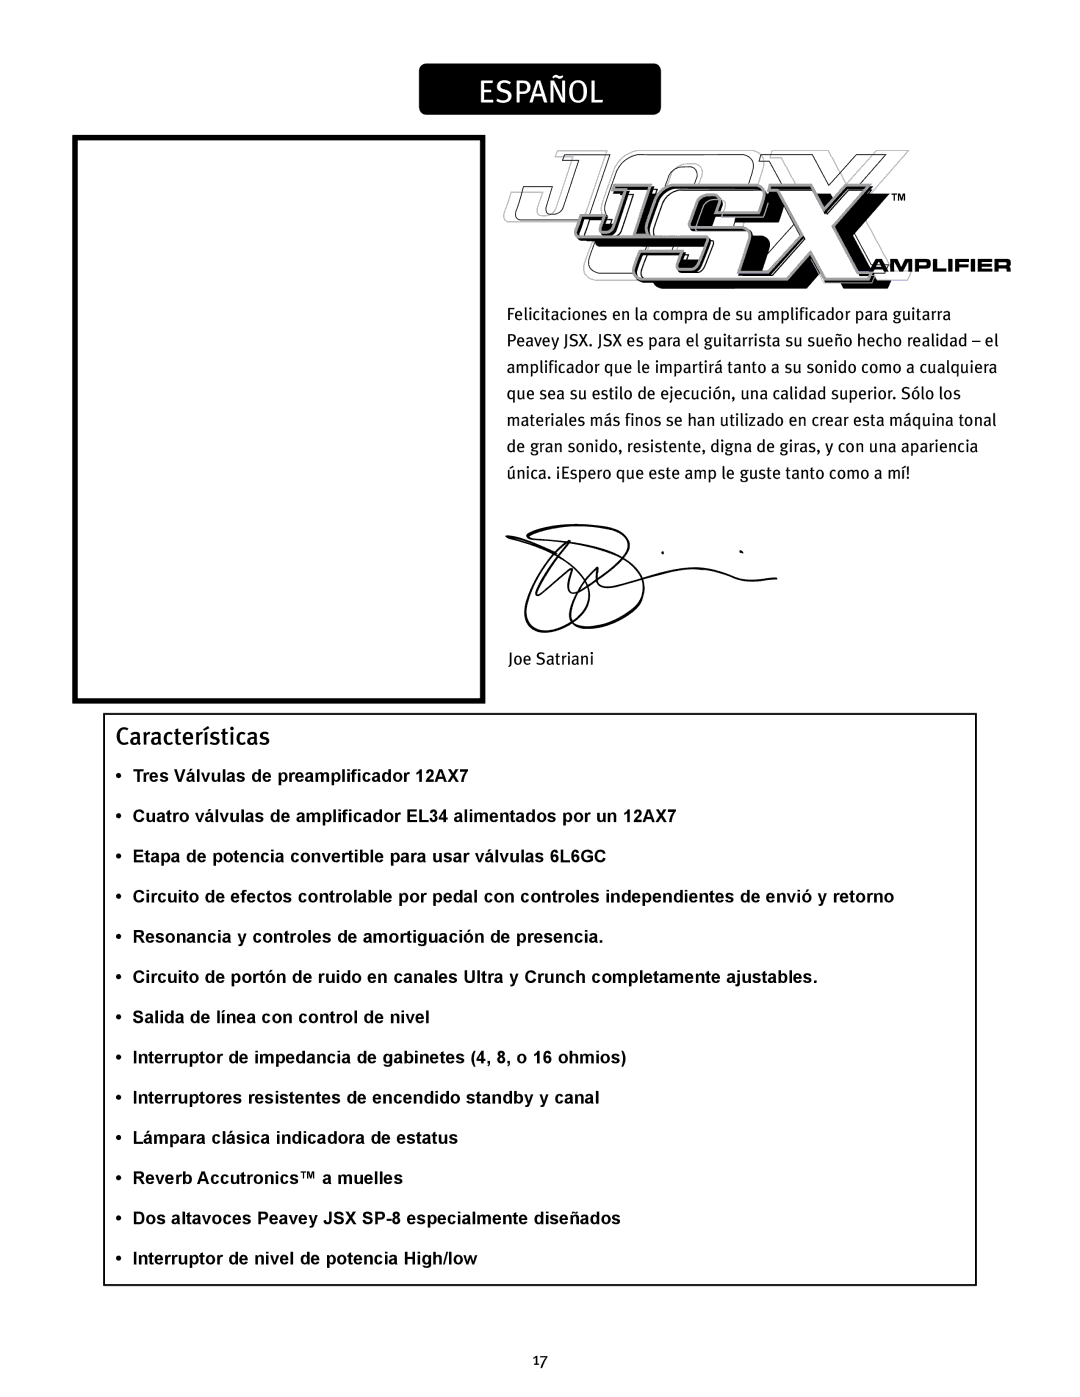 Peavey JSX 212 manual Español 